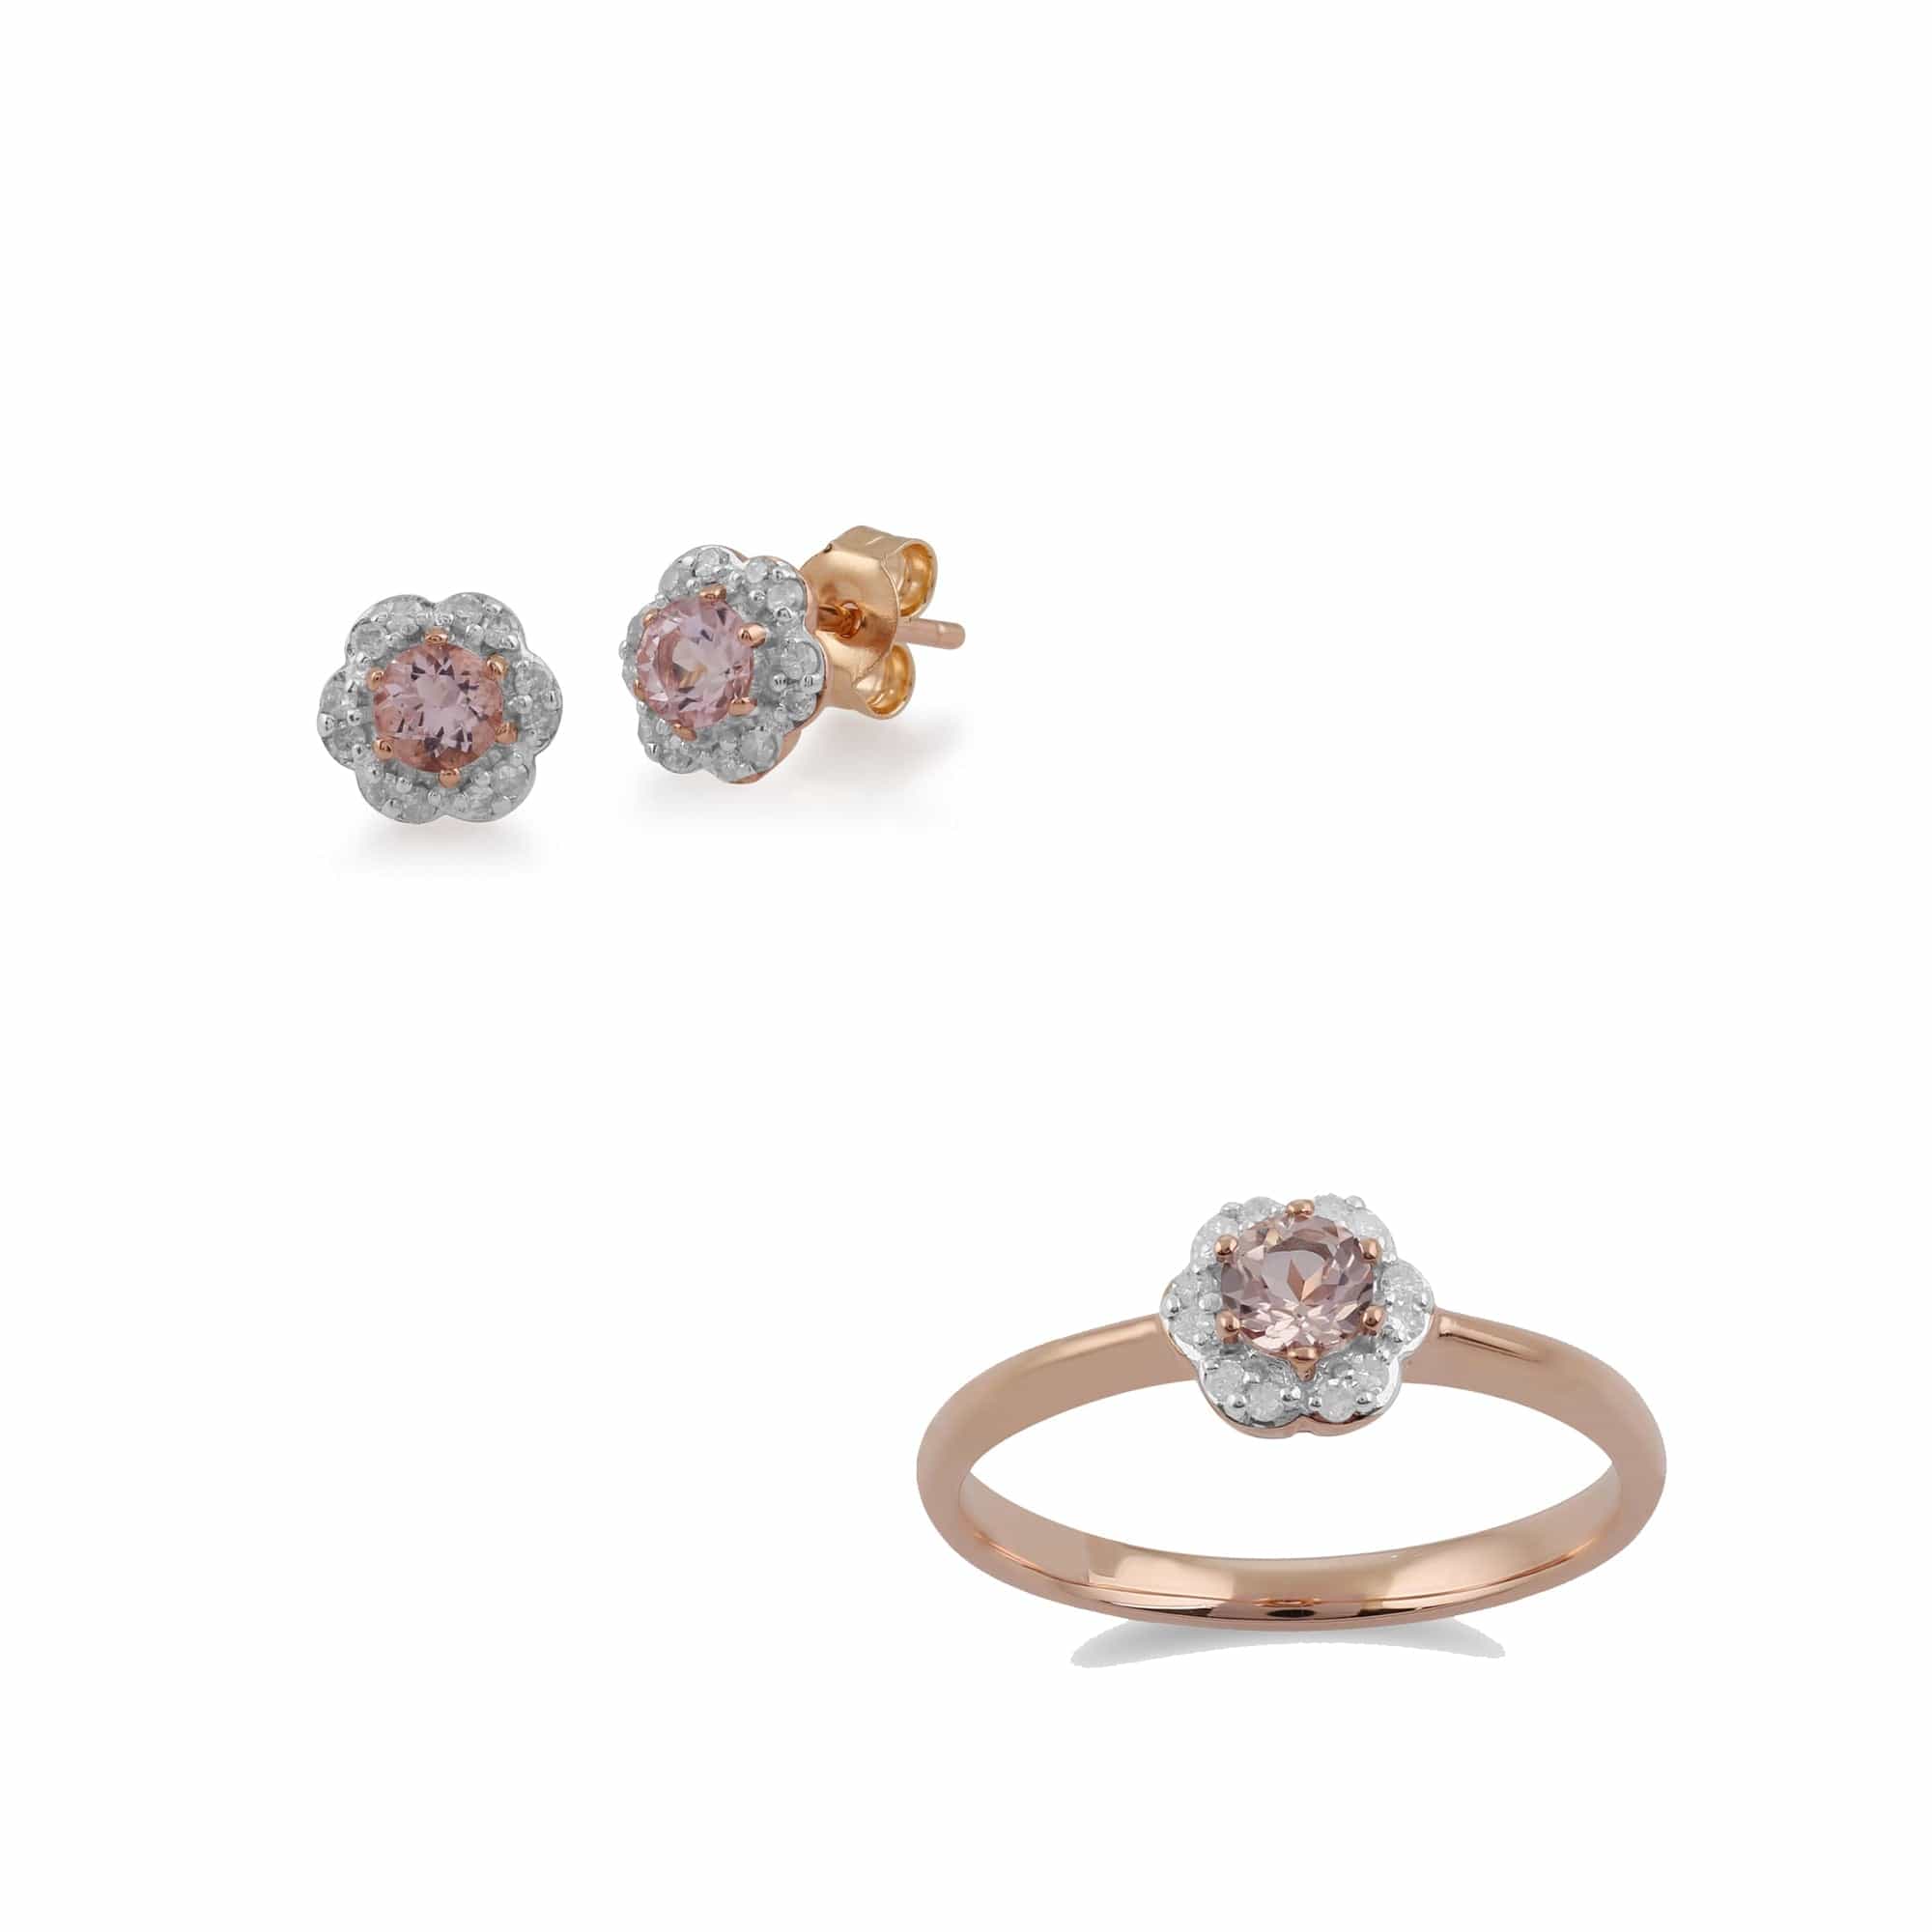 135E1305019-135R1427019 Floral Round Morganite & Diamond 9ct Rose Gold Earring & Ring Set 1